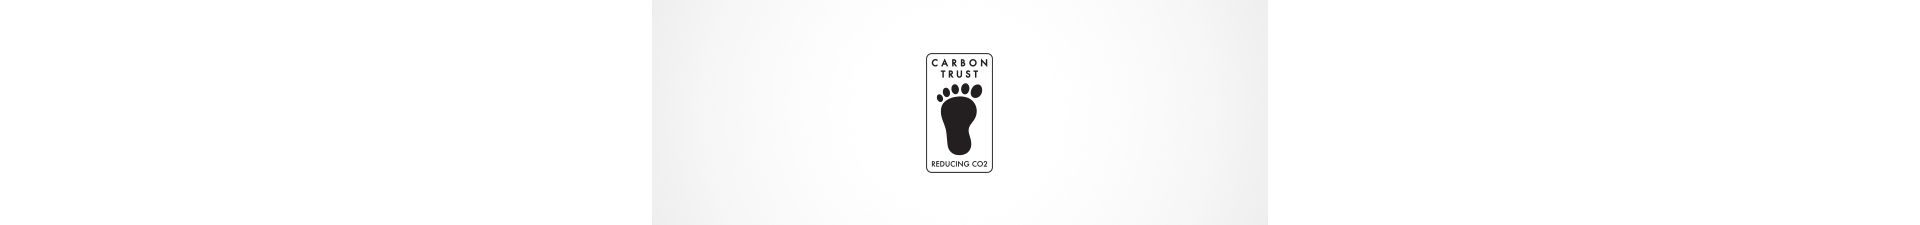 Carbon trust logo